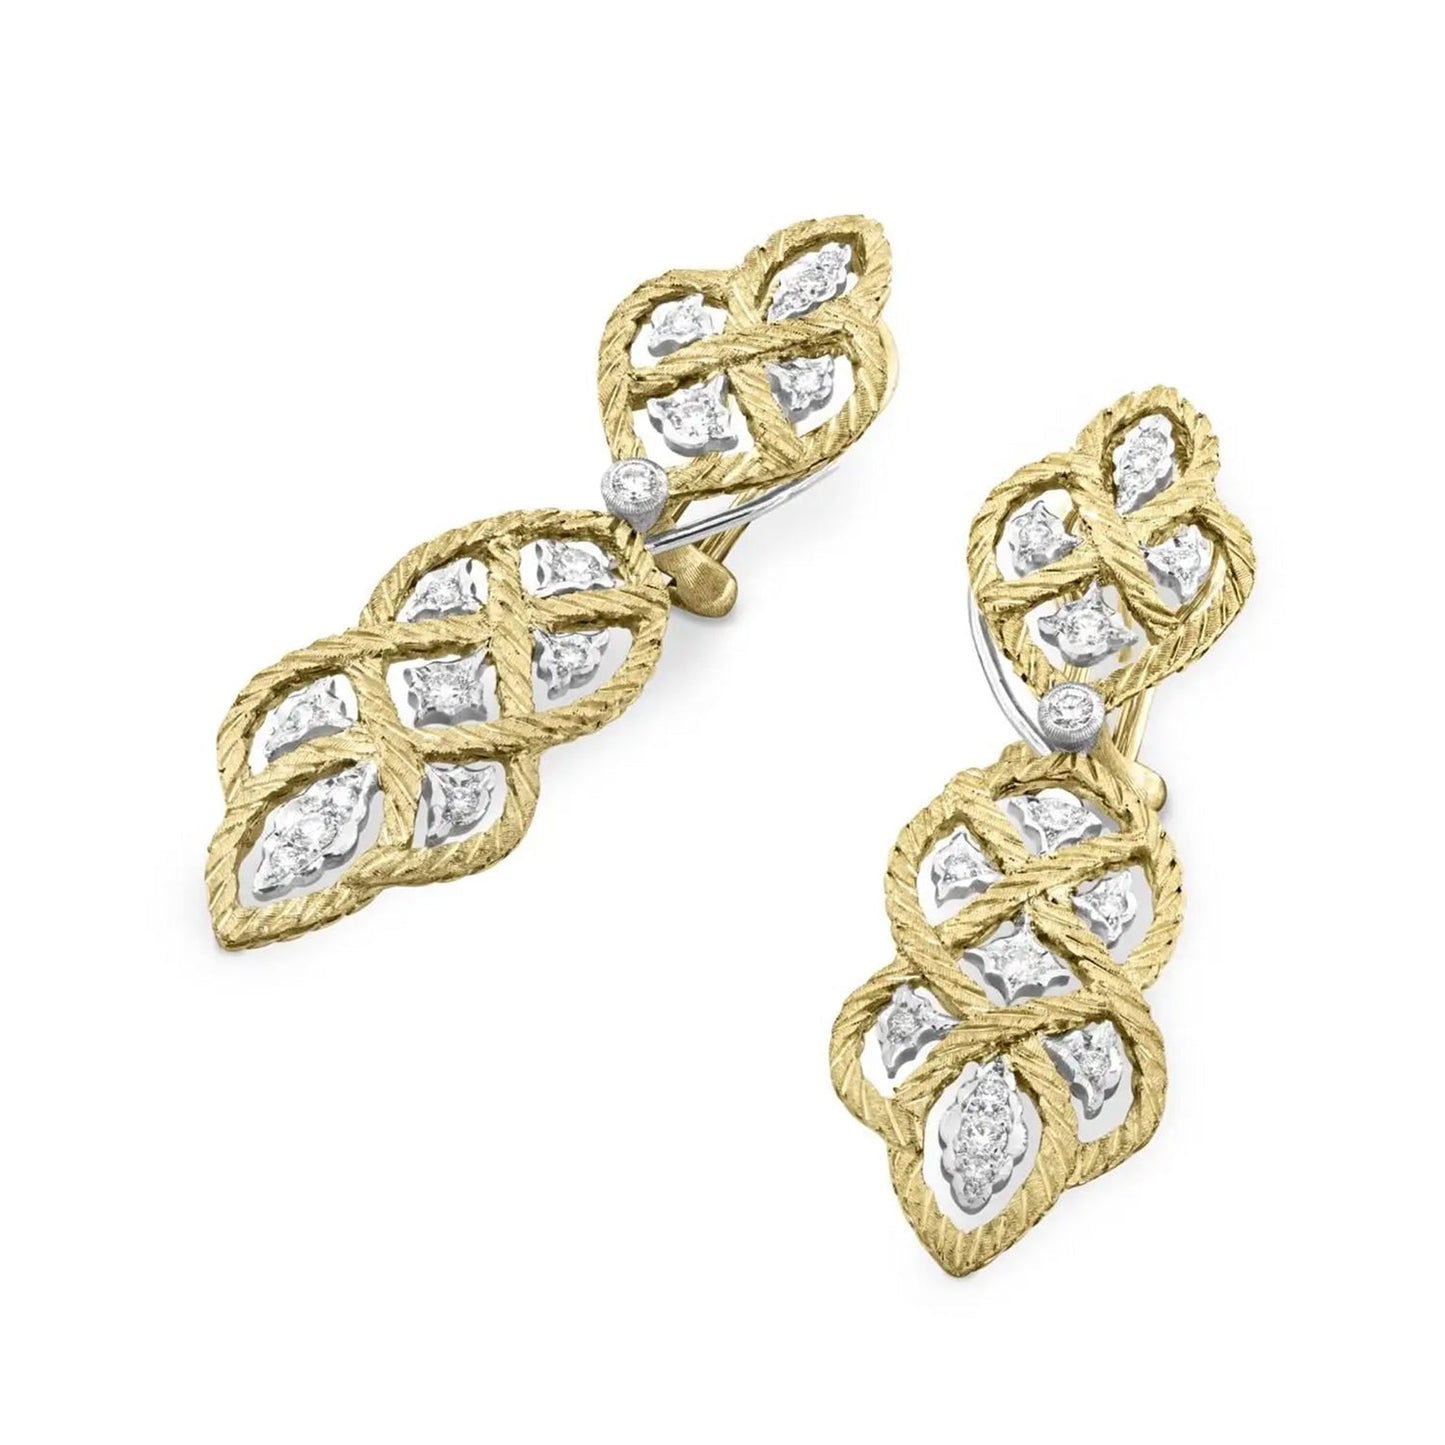 Buccellati - 18k Gold Diamond Étoilée Drop Earrings